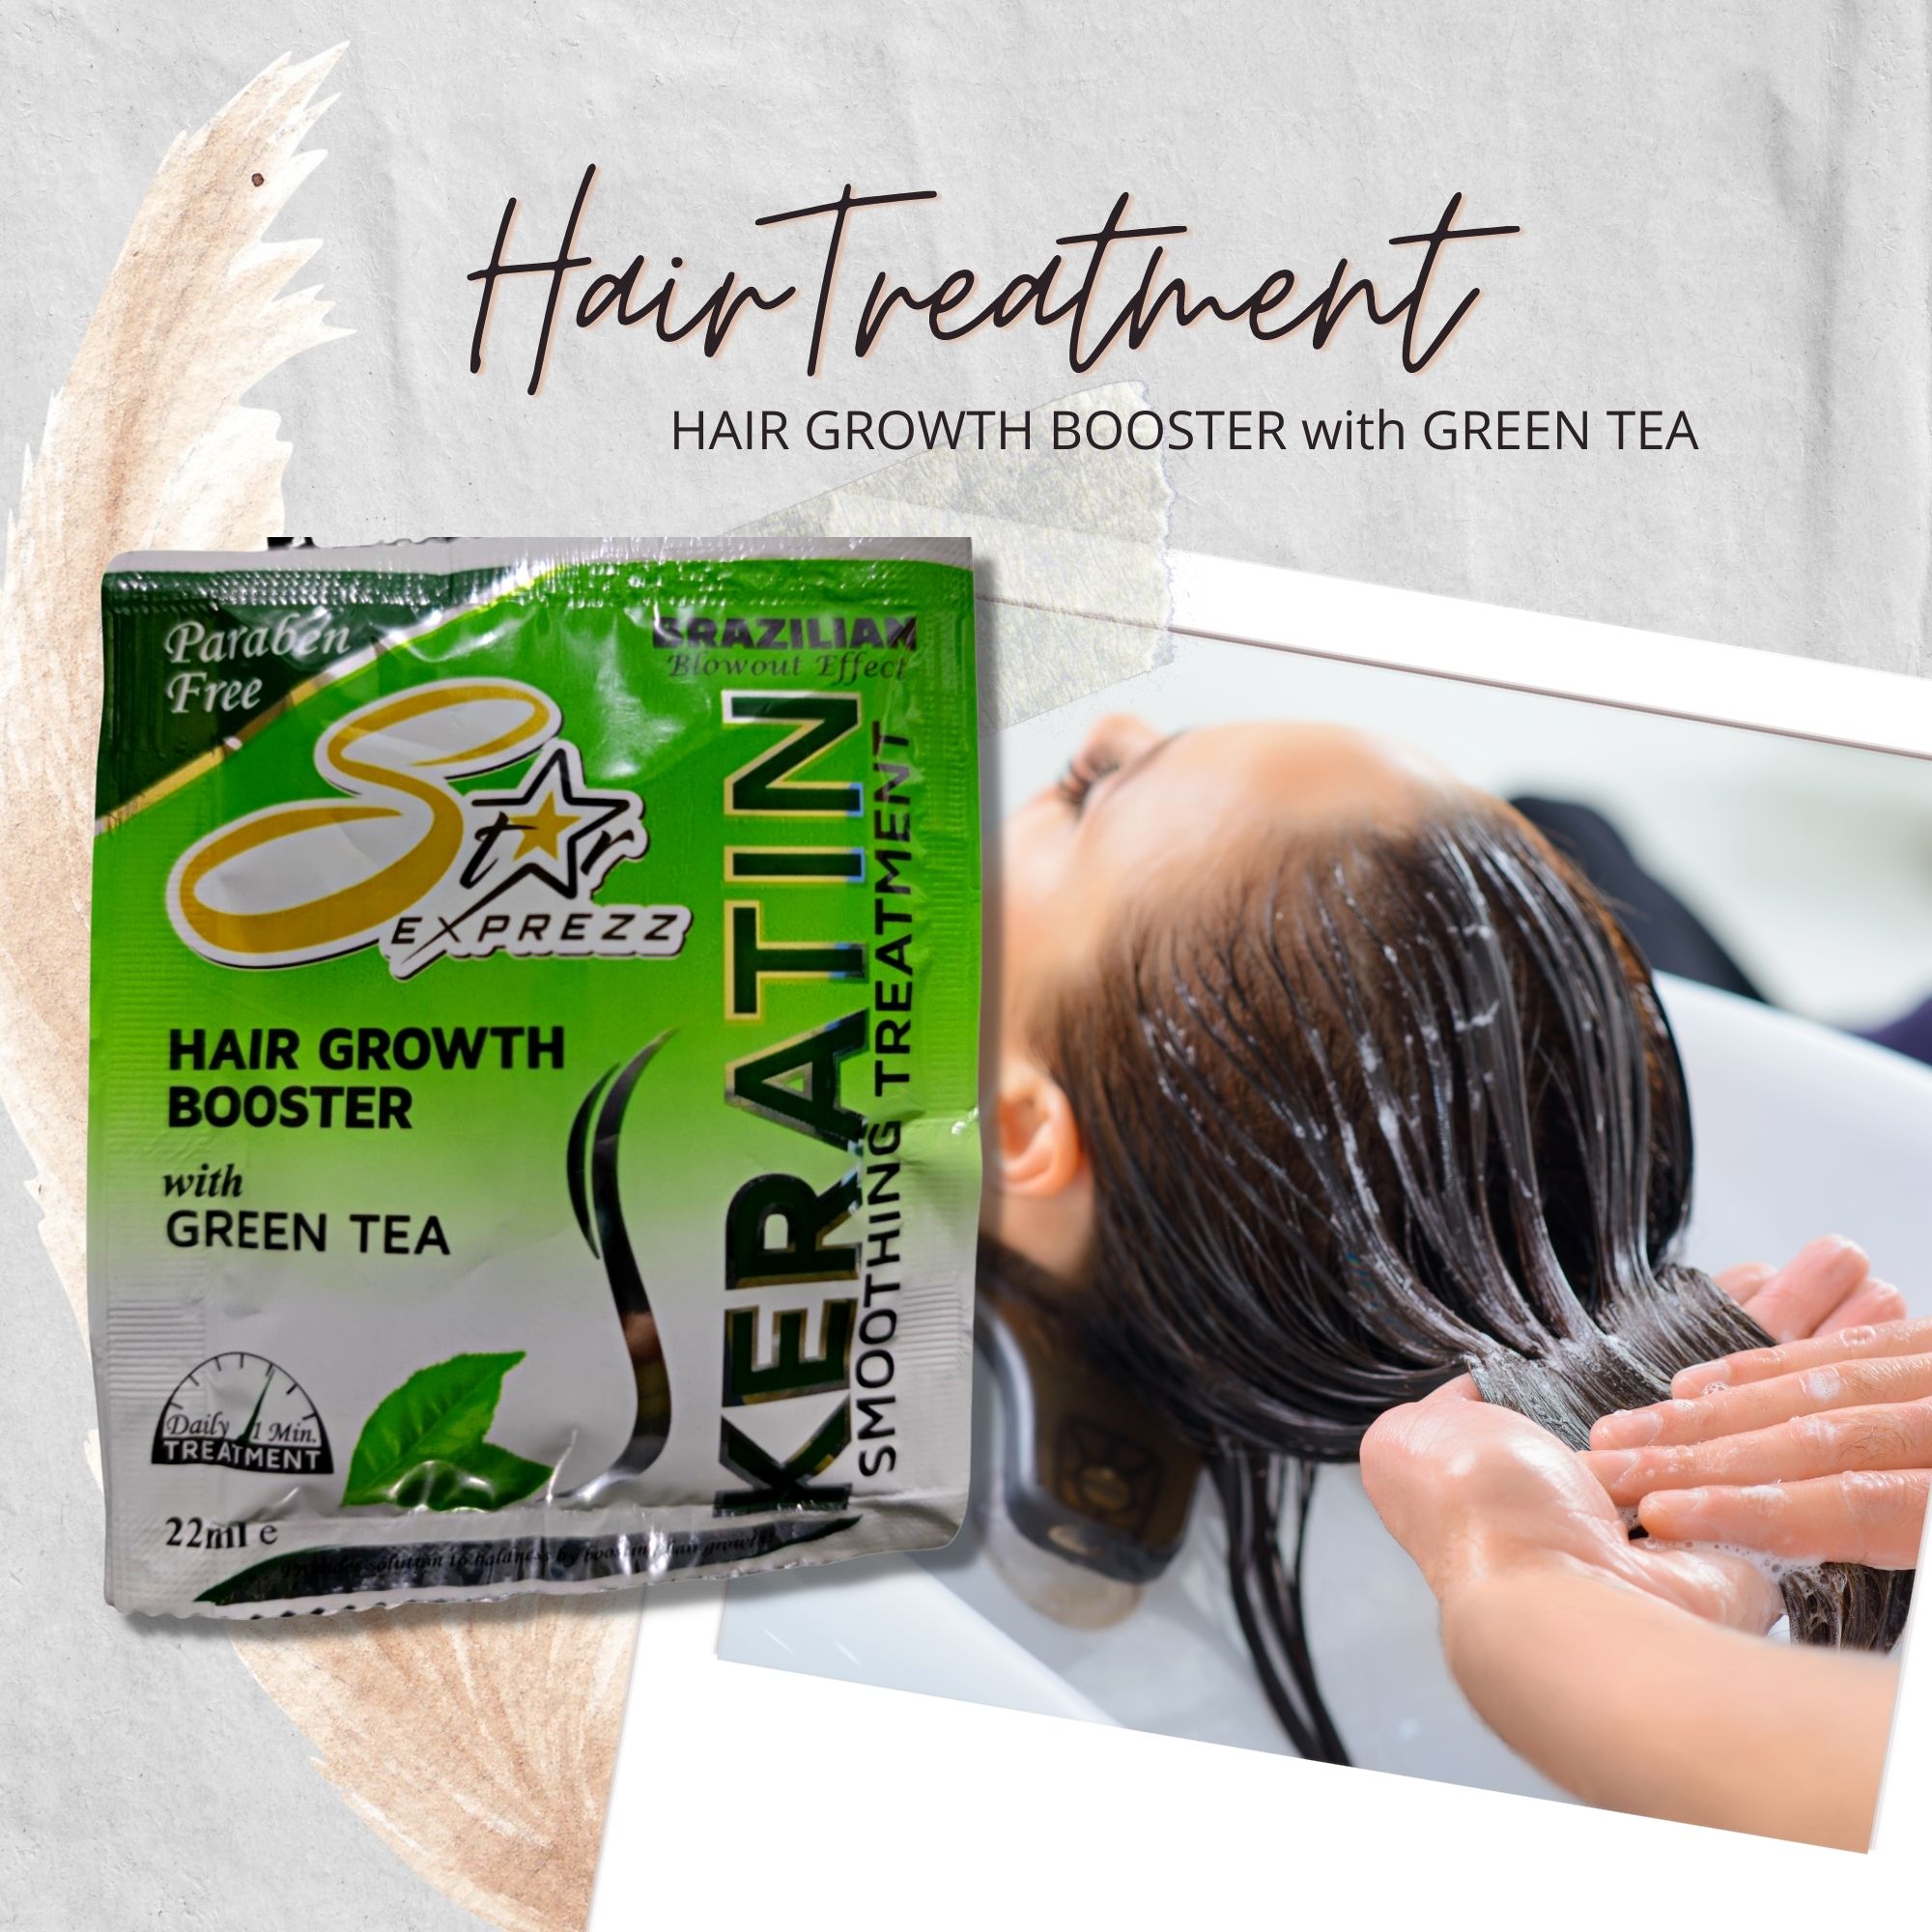 Star Expresz Keratin Hair Growth Booster with Green Tea